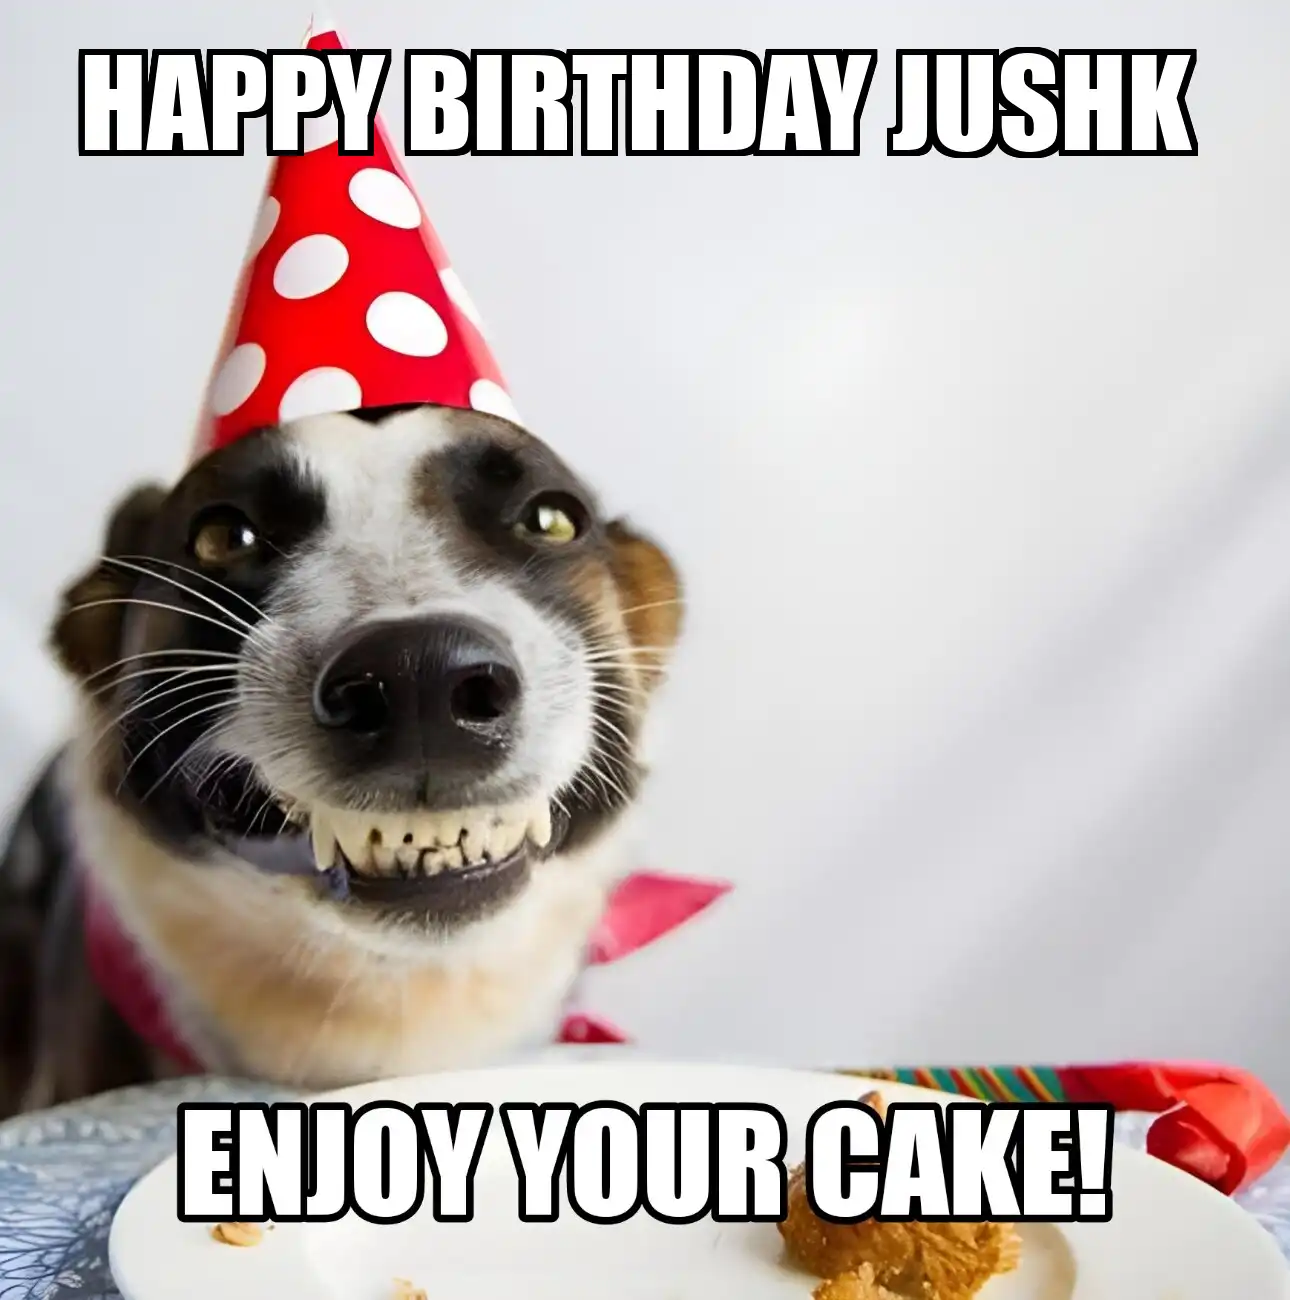 Happy Birthday Jushk Enjoy Your Cake Dog Meme